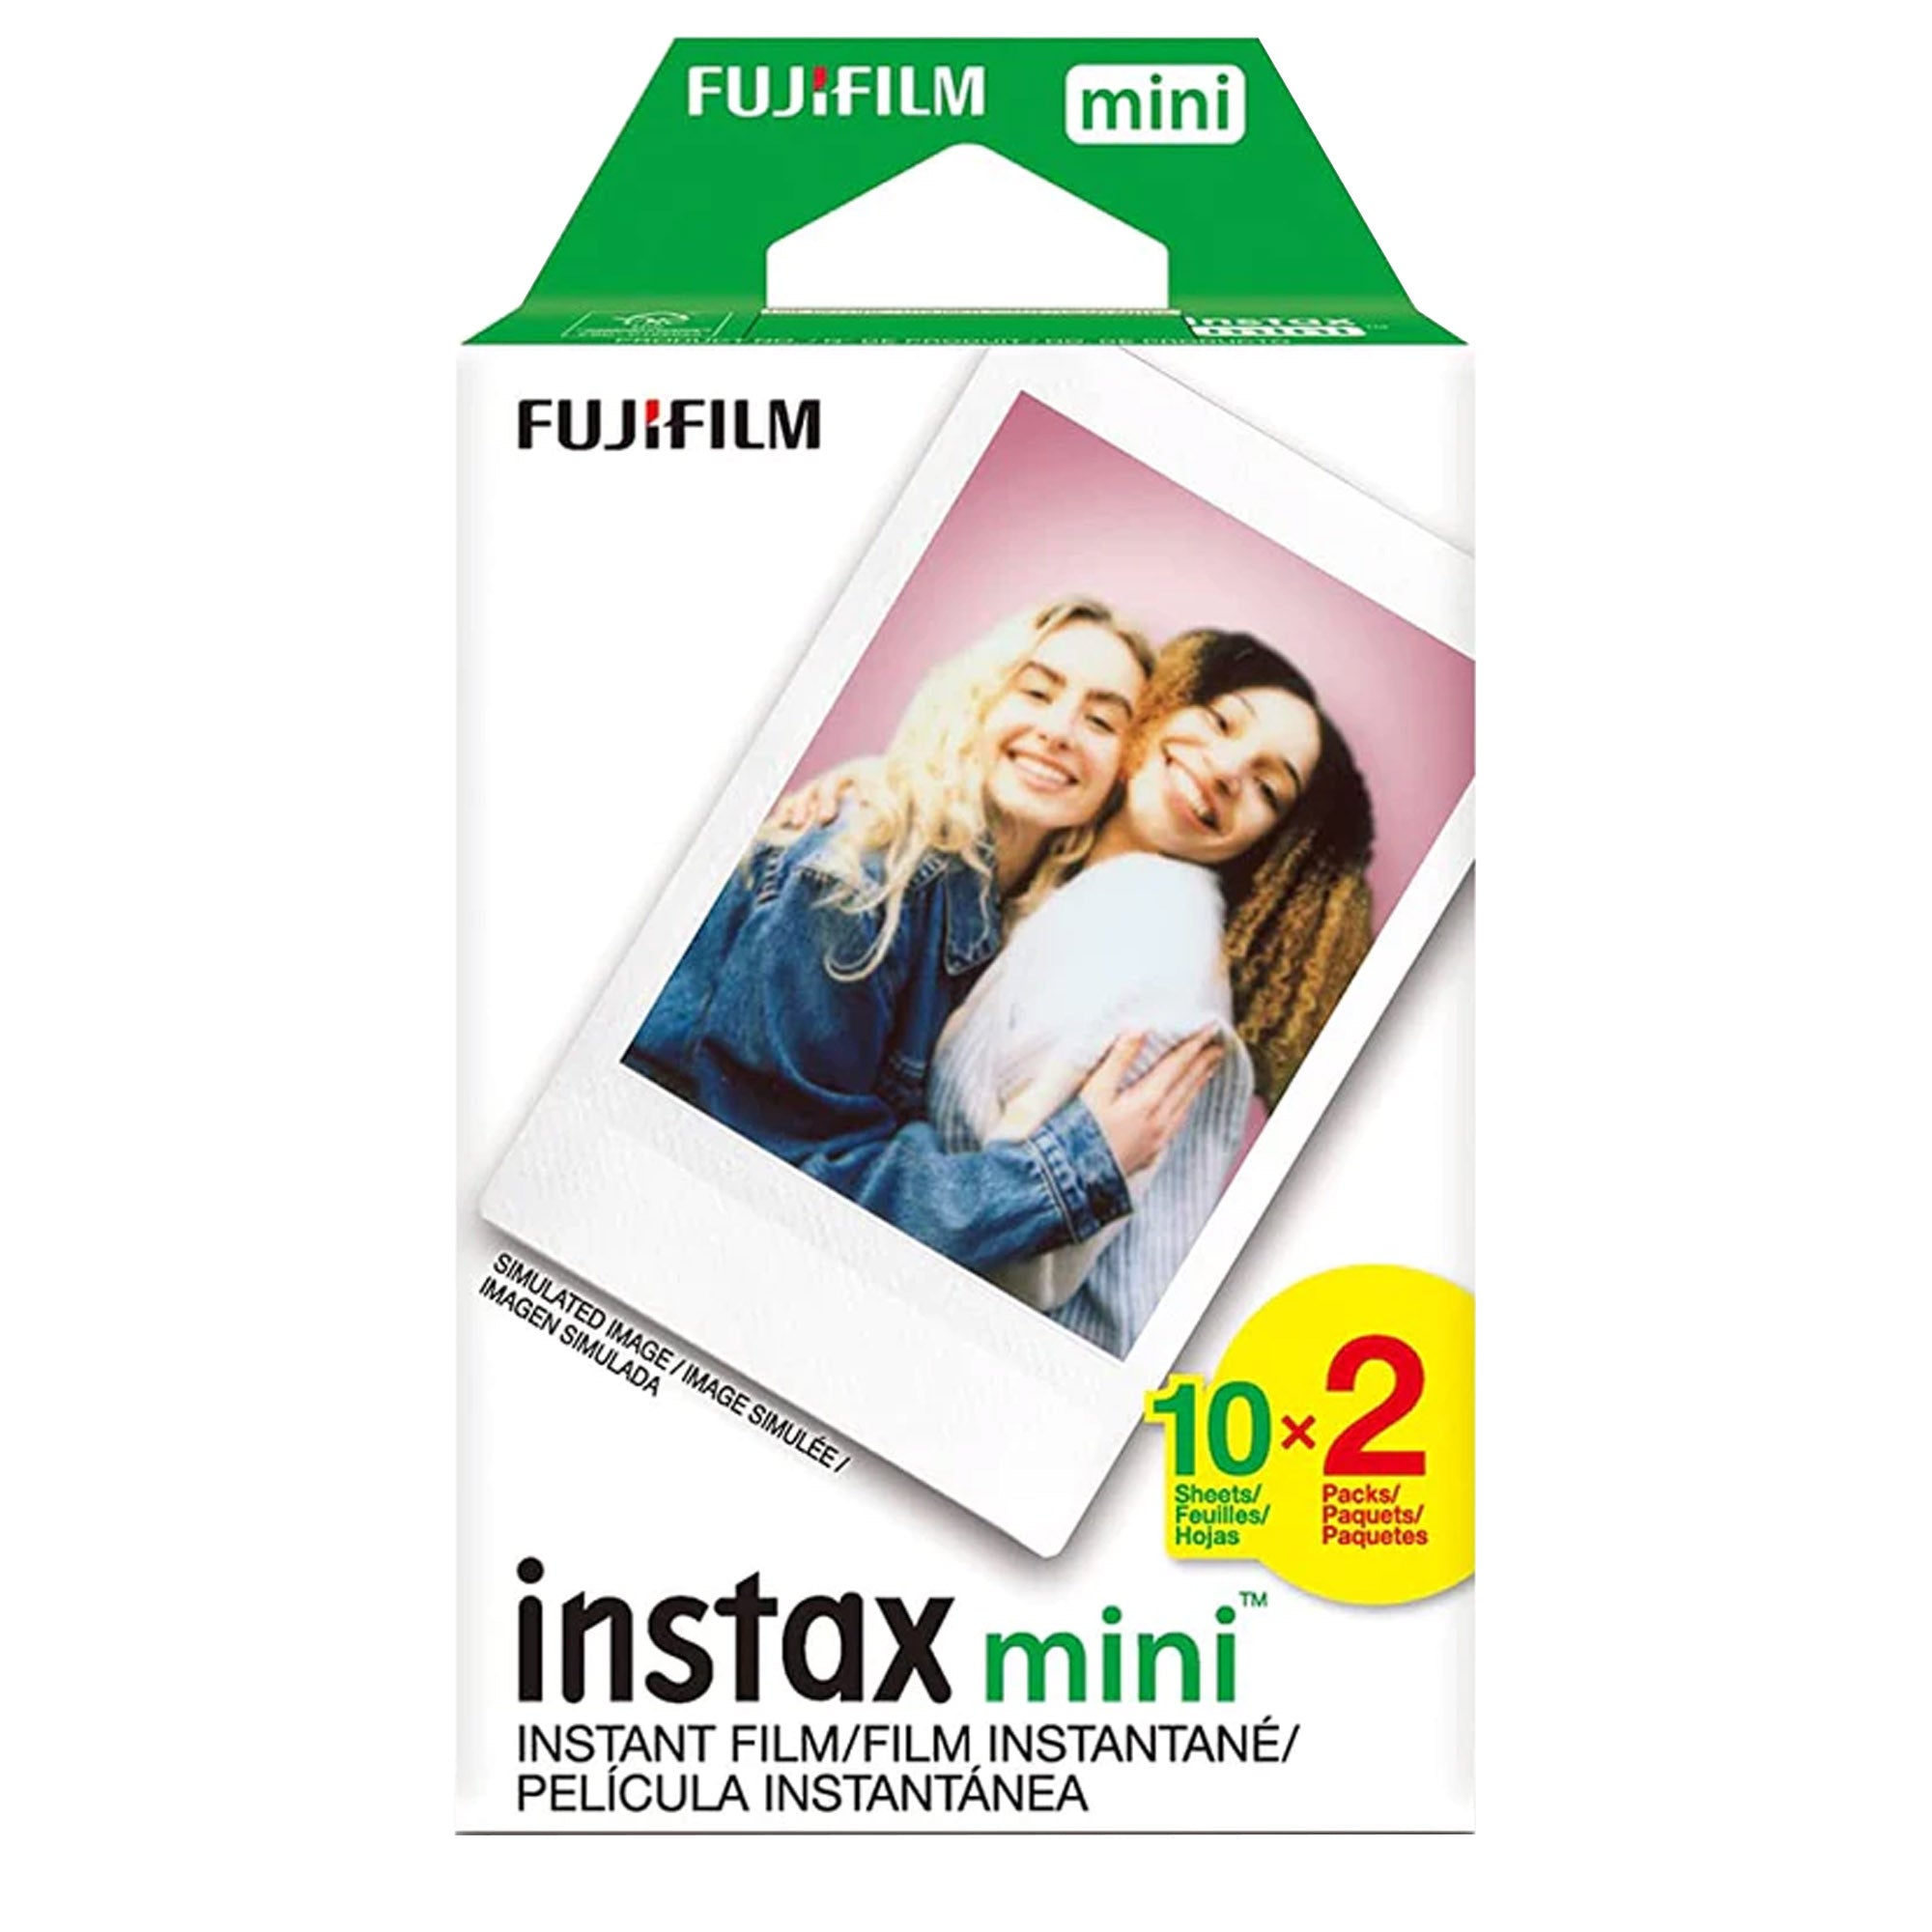 Essentials Bundle for Fujifilm Instax Mini Film Camera with 40 Films + Bag